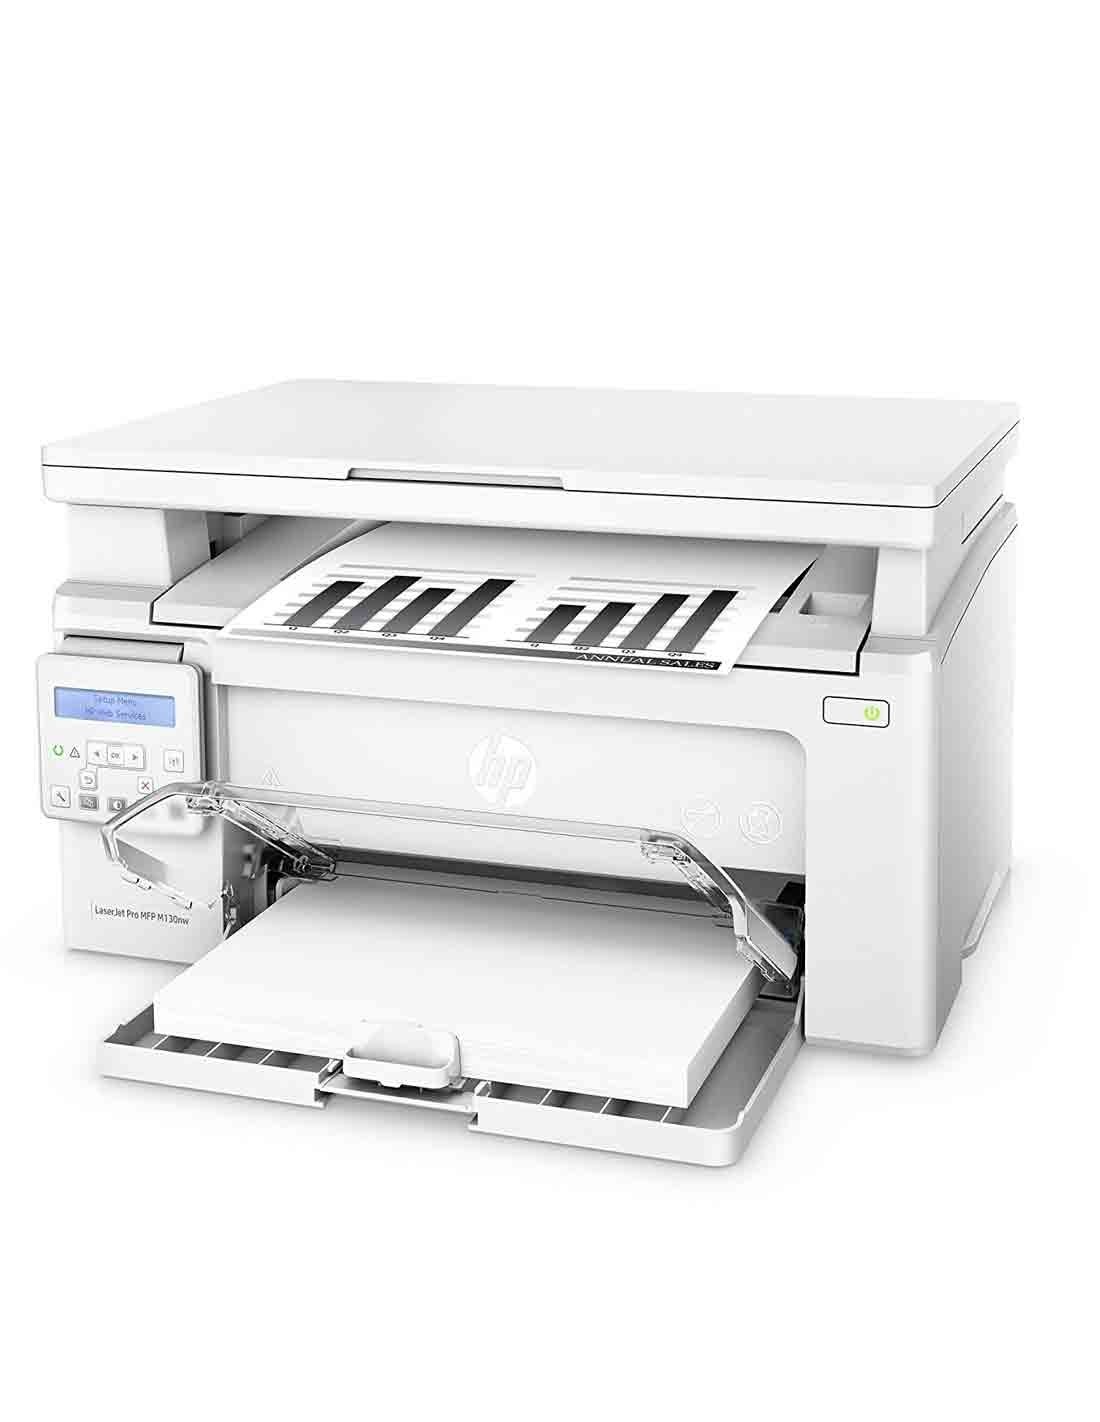 HP LaserJet Pro MFP M130nw (G3Q58A) Printer